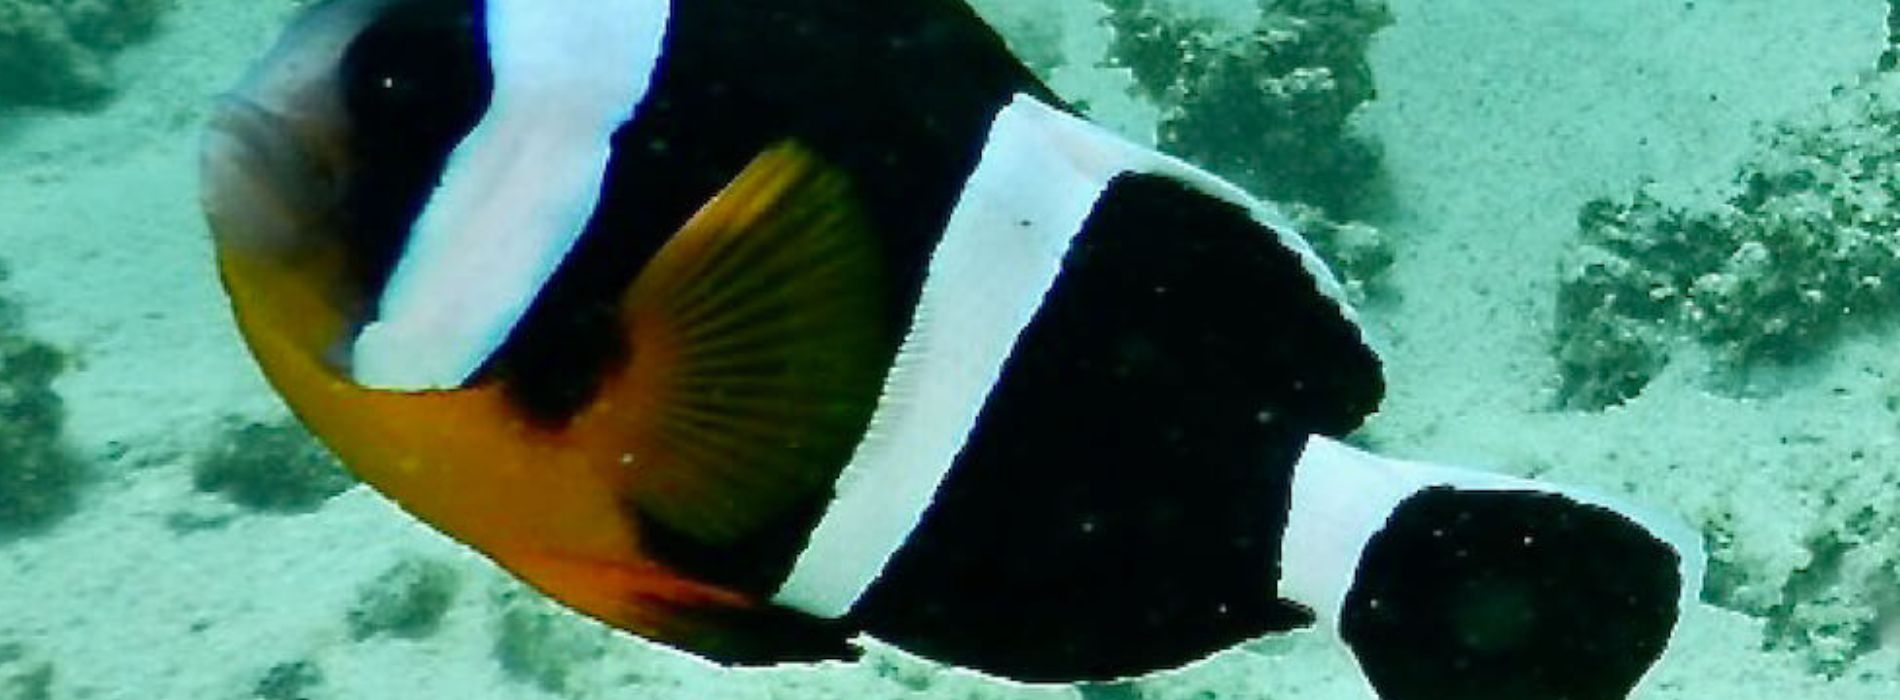 Vista lateral del pez anémona de Mauricio